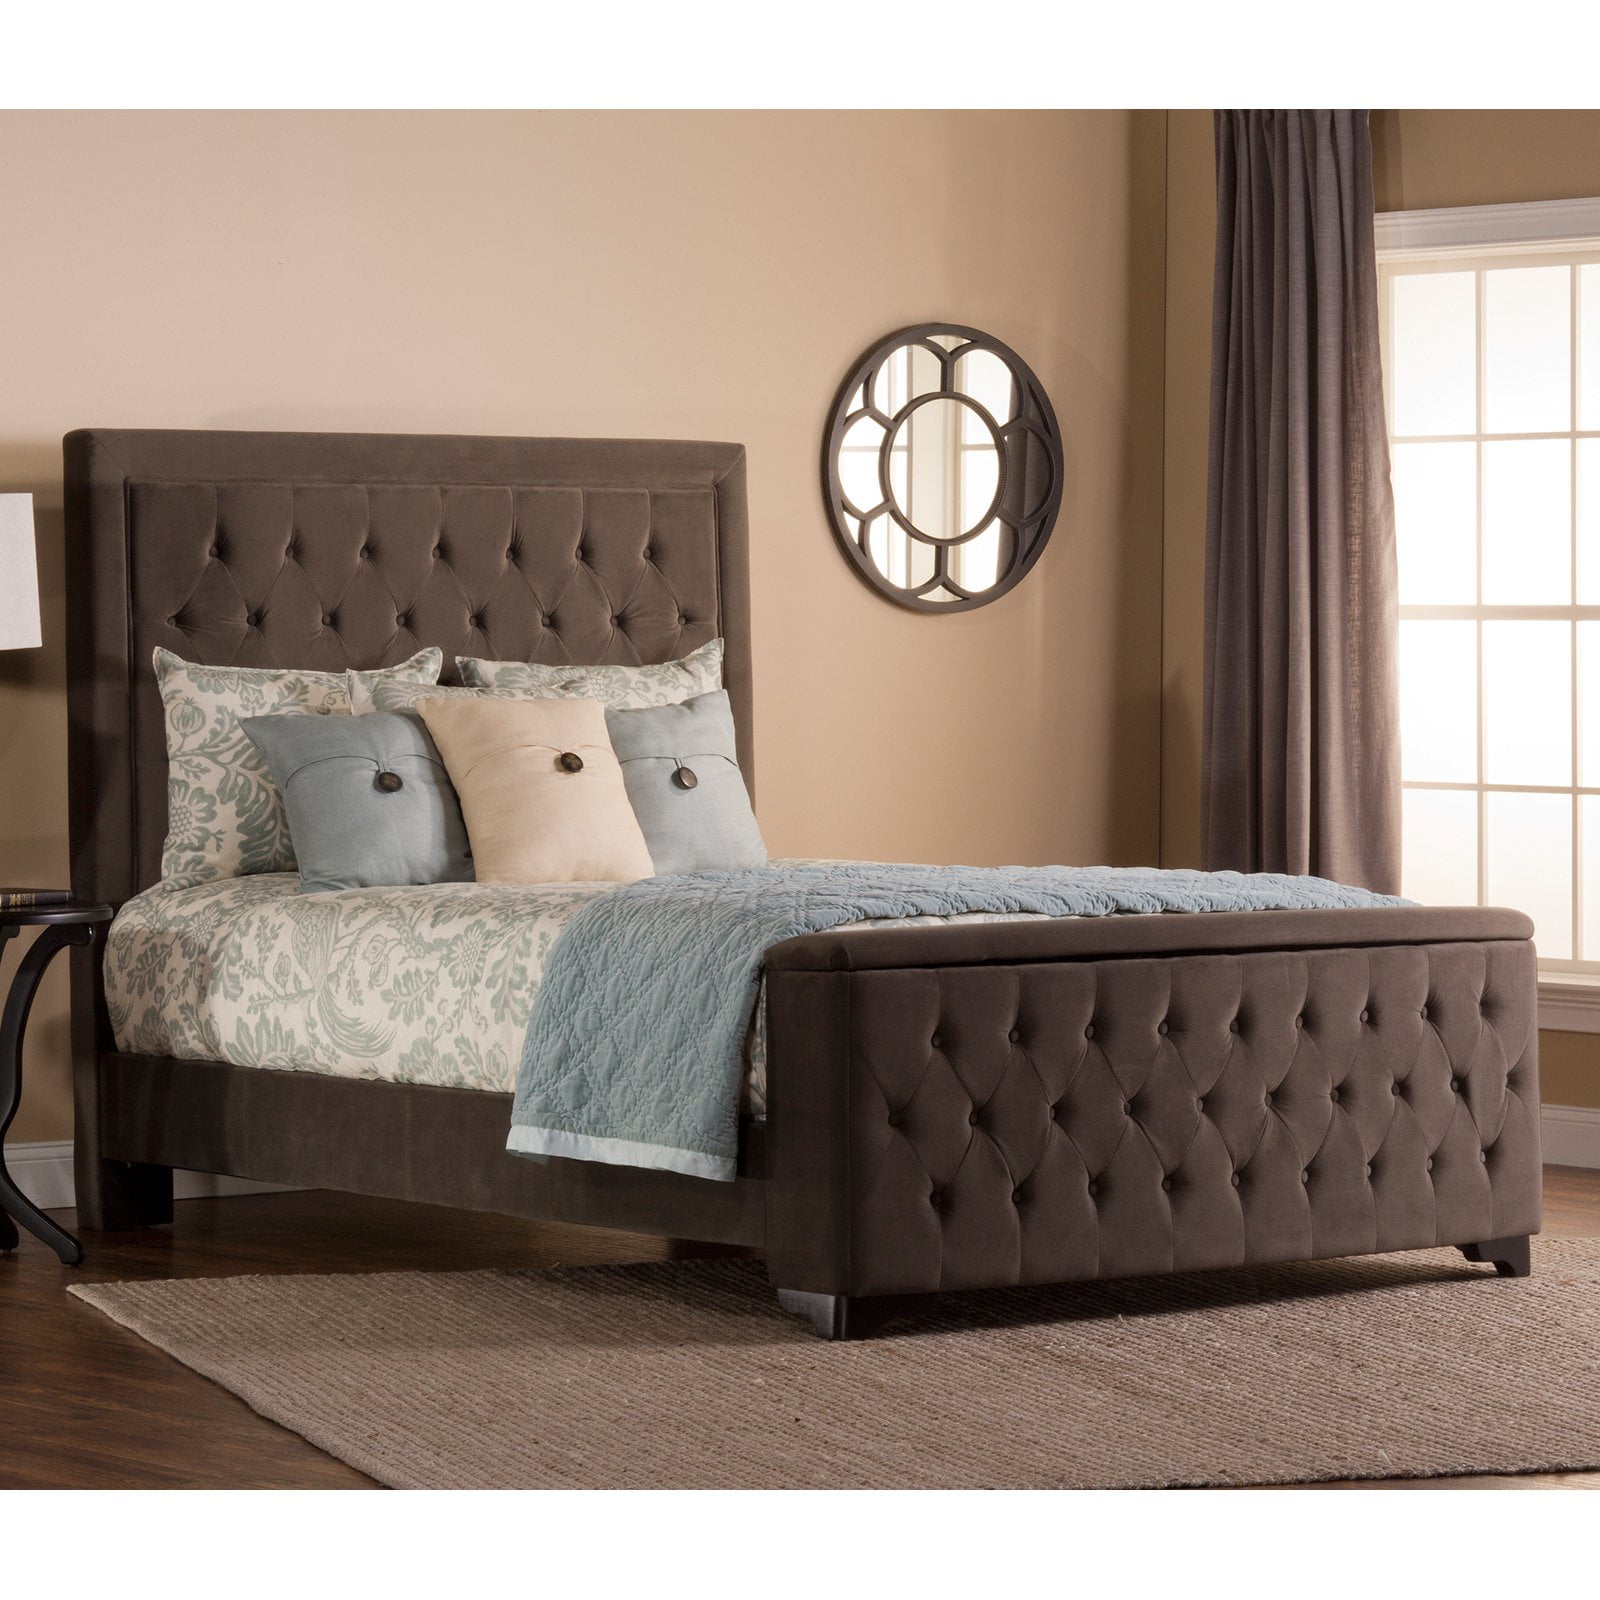 Hillsdale Kaylie Upholstered Bed with Storage Footboard - Walmart.com